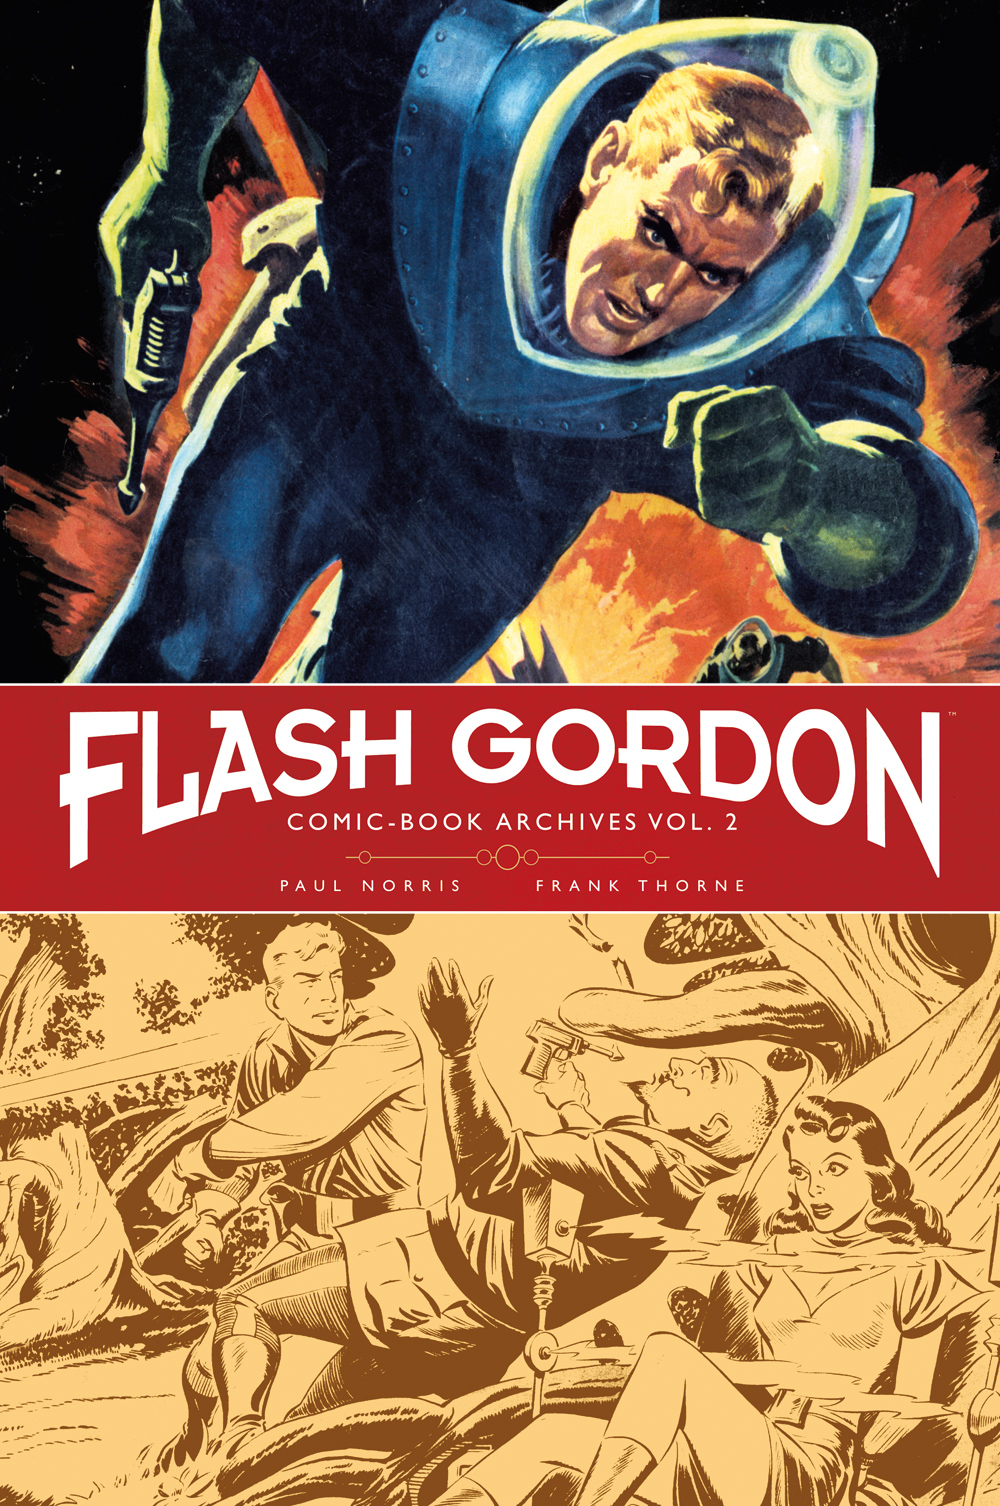 Flash Gordon: Comic-book archives, Vol. 2